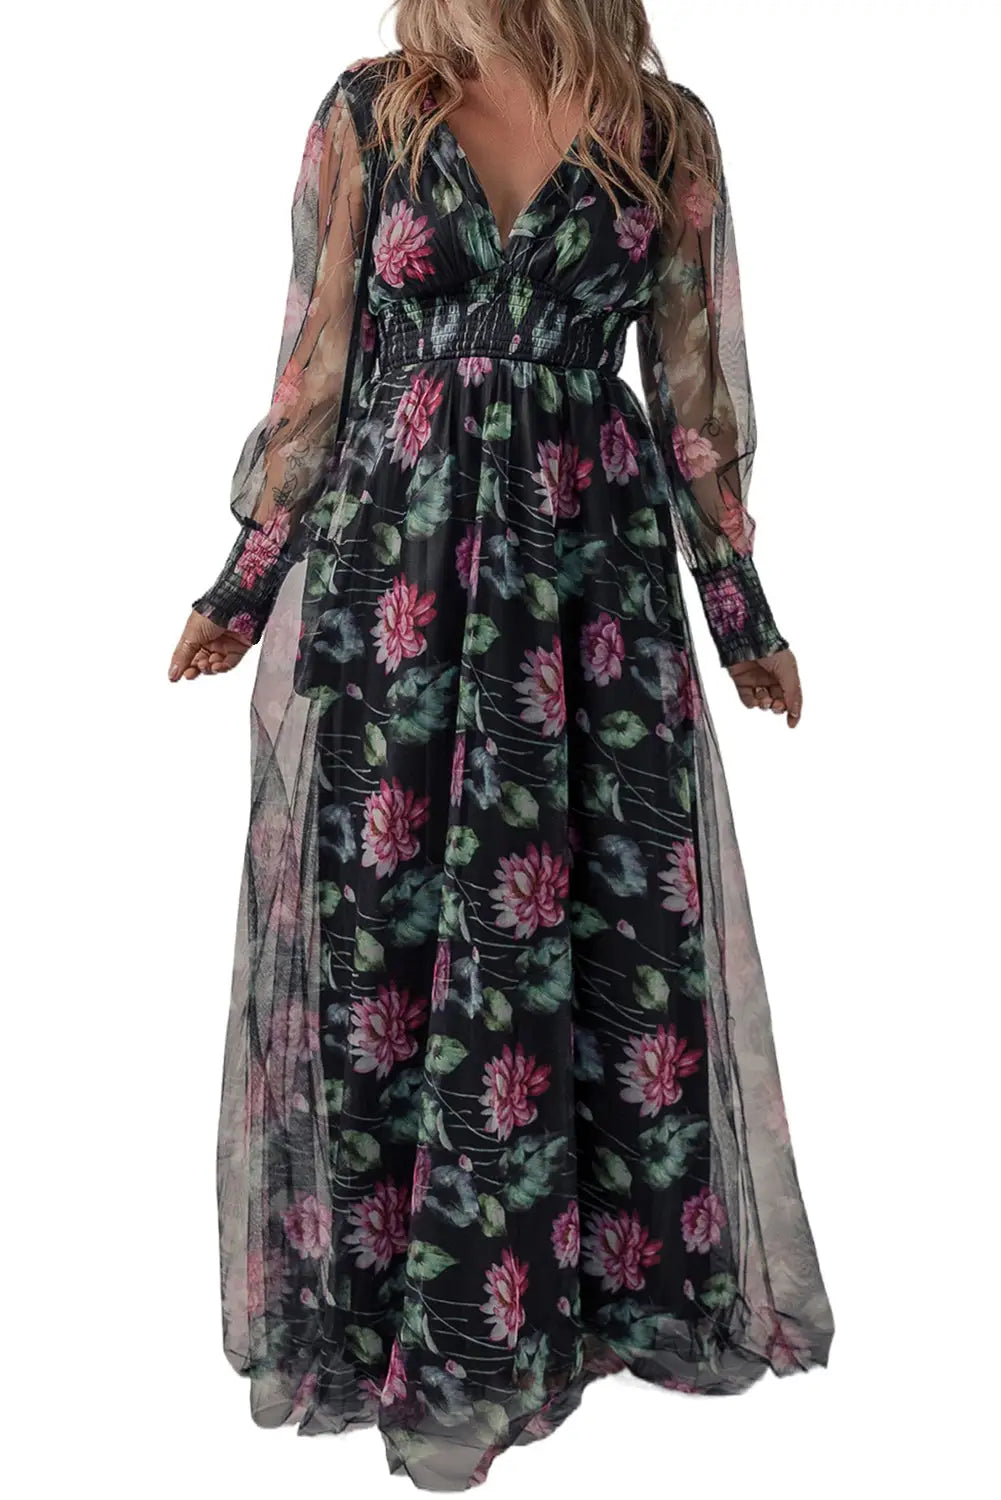 Black mesh sheer shirred high waist floral maxi dress -